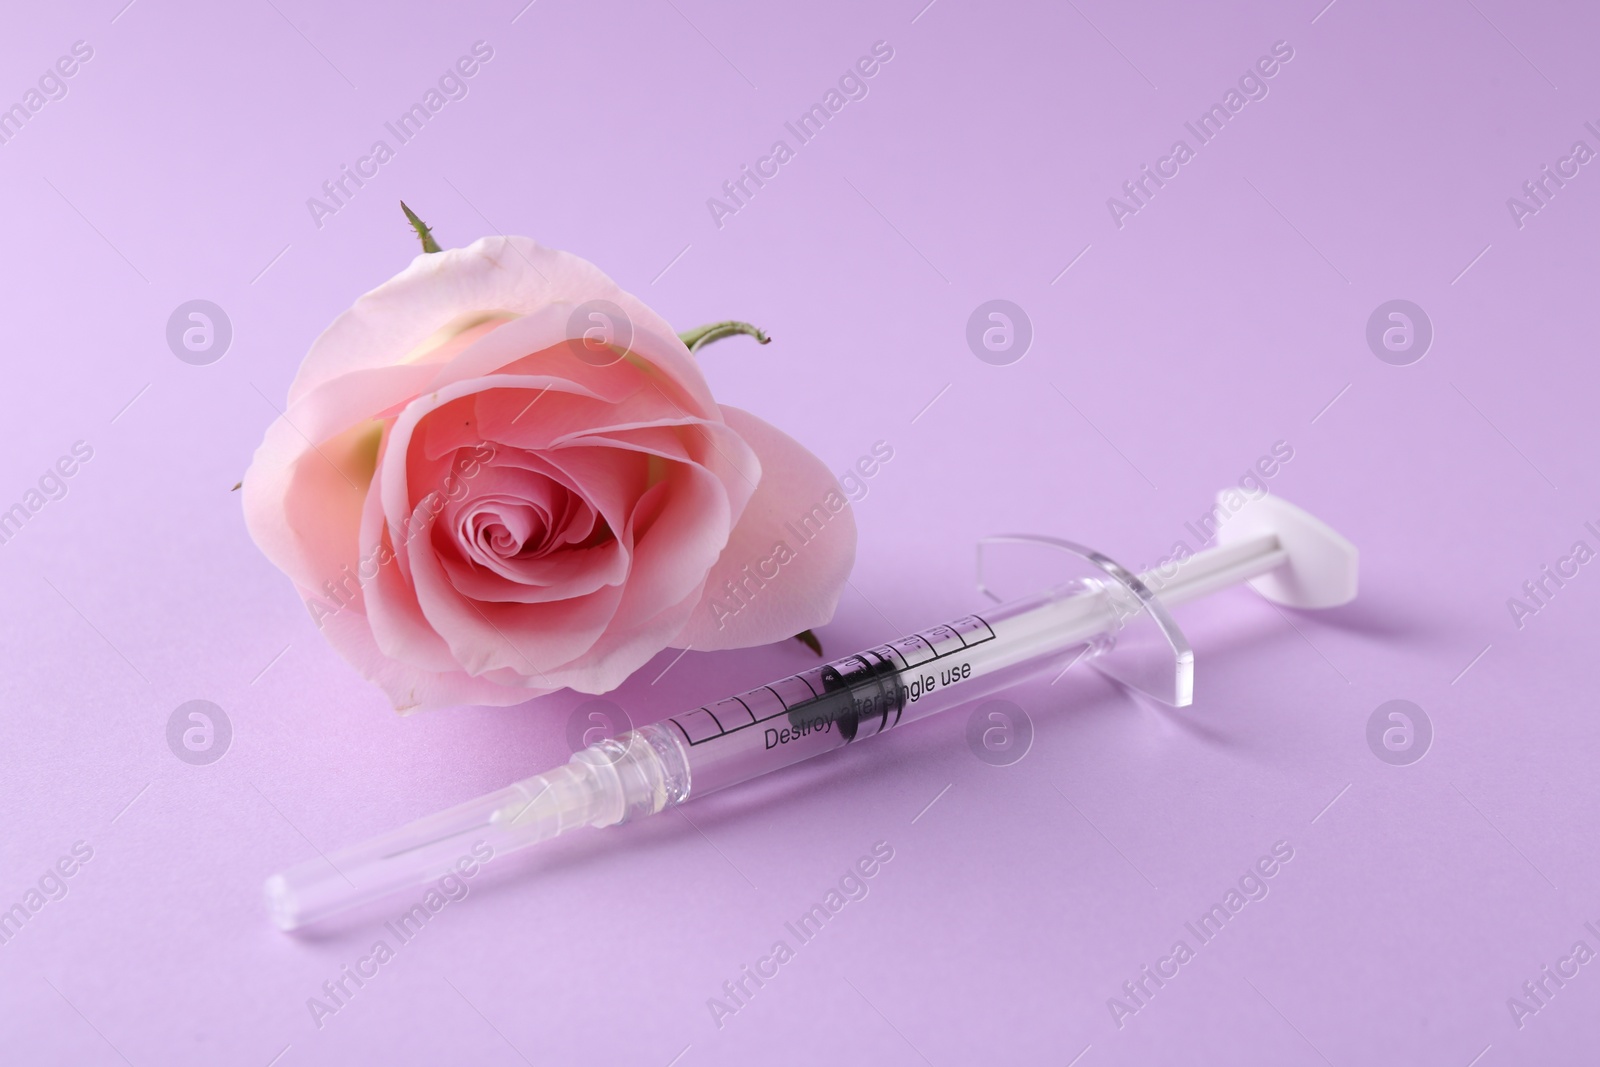 Photo of Cosmetology. Medical syringe and rose flower on violet background